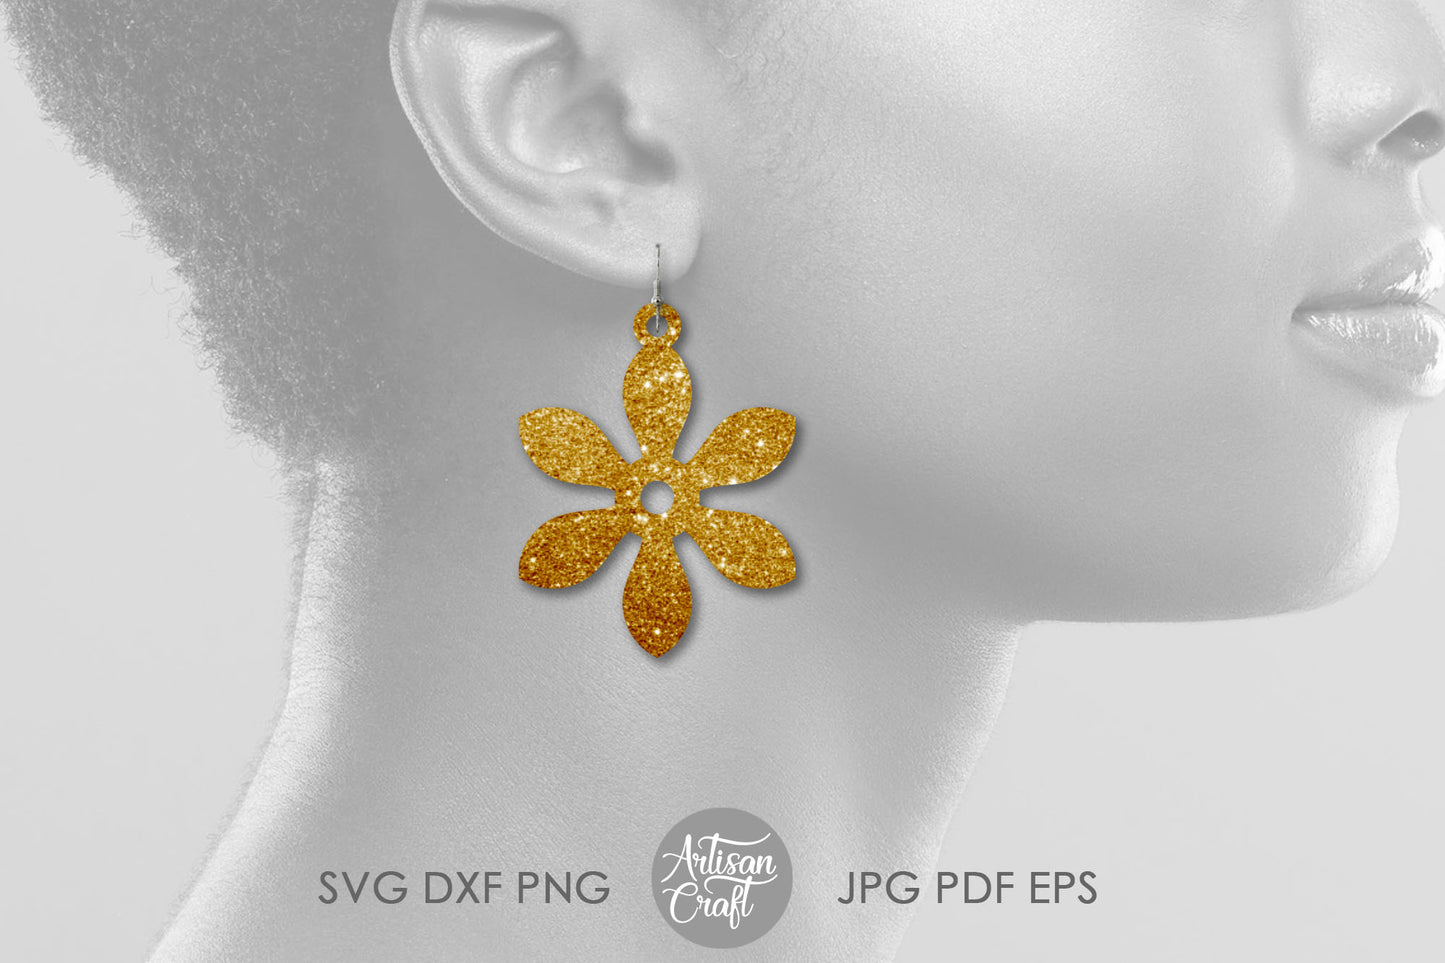 Floral earrings SVG files